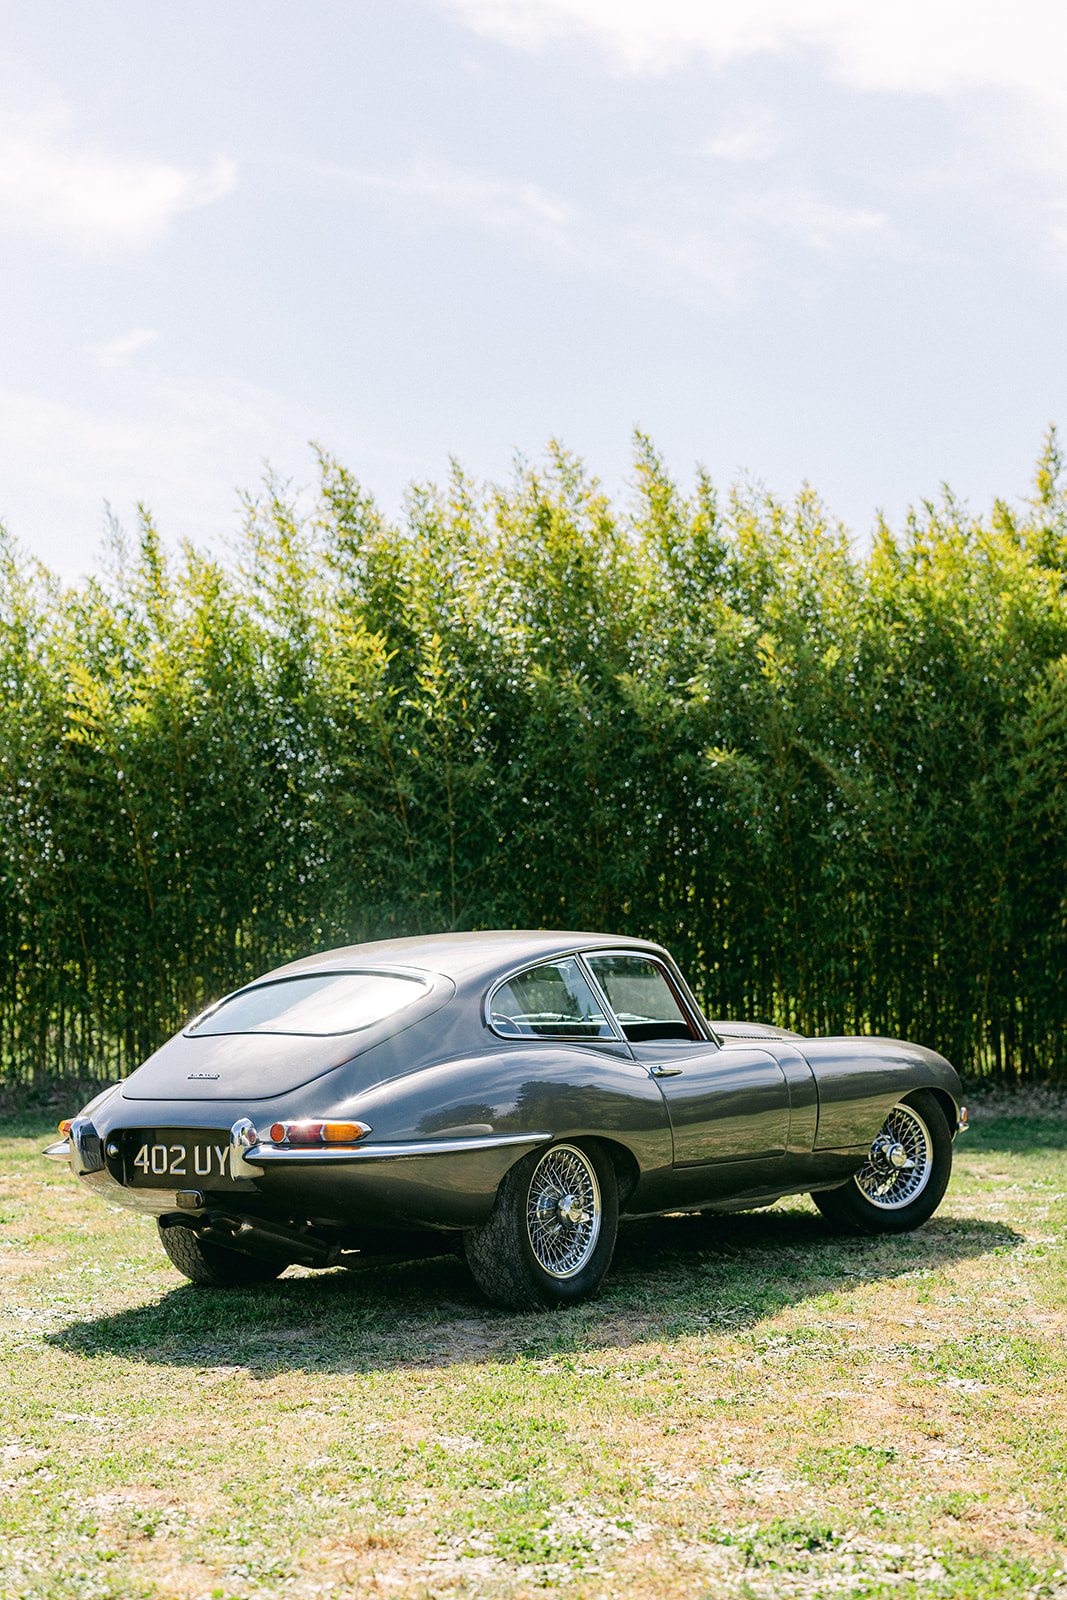 A view of the Provence Classics 1962 Jaguar E-Type